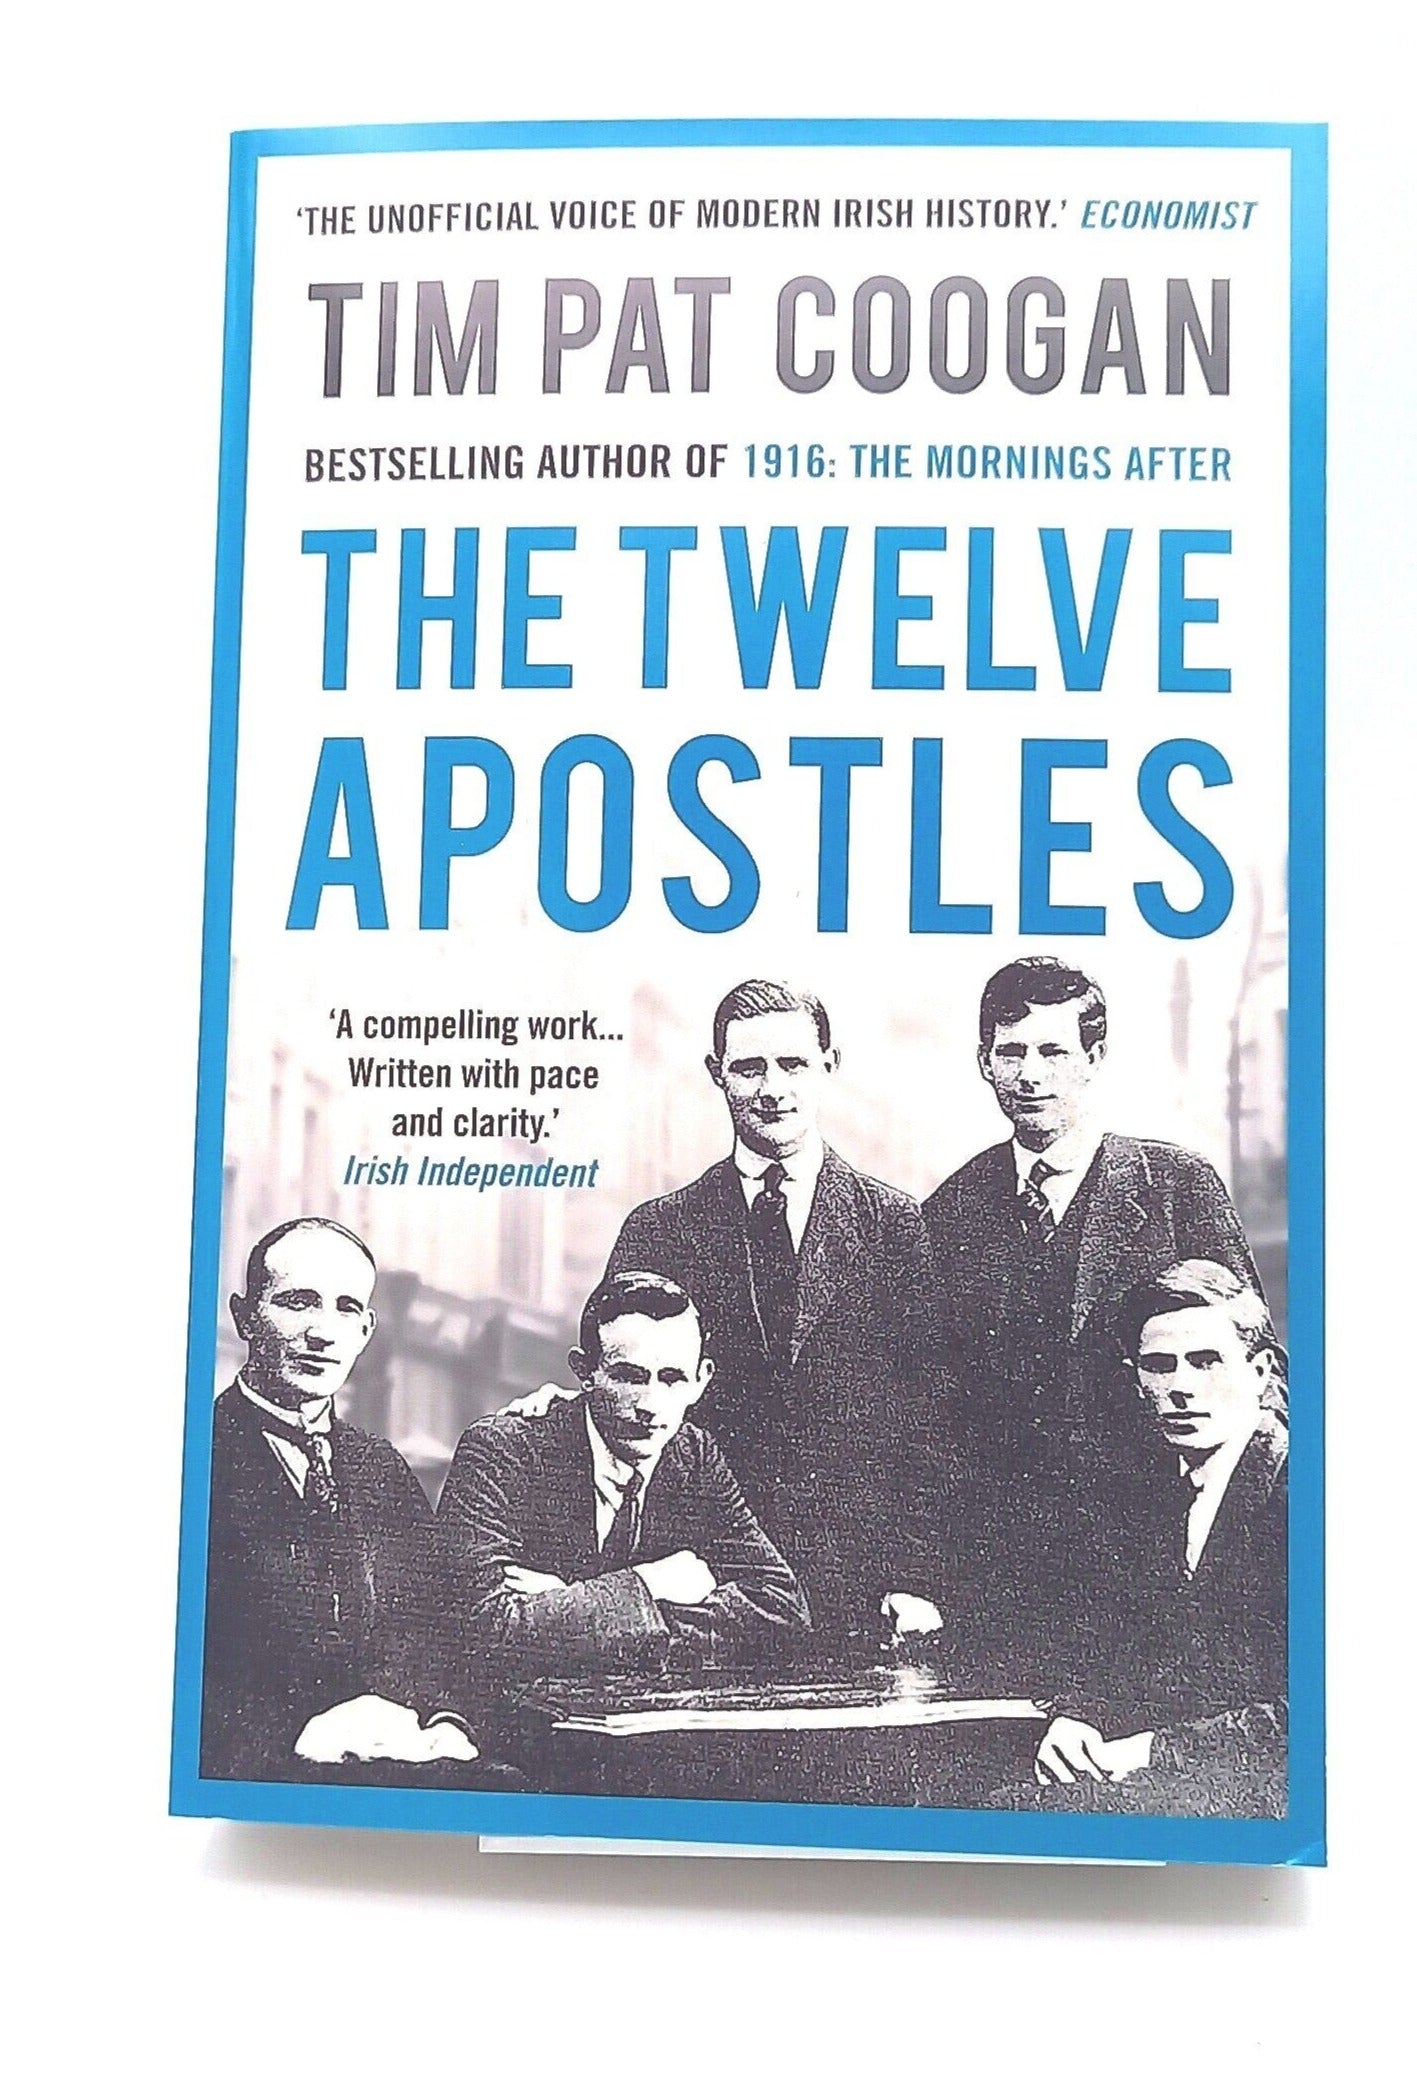 The Twelve Apostles paperback Book by Tim Pat Coogan